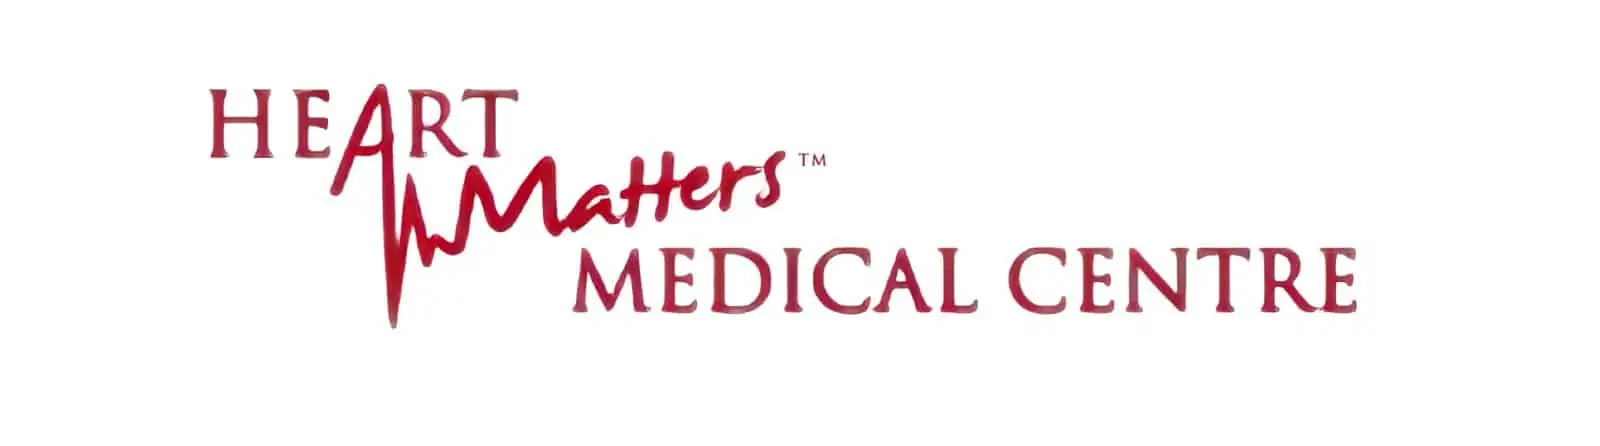 Heart Matters Medical Centre